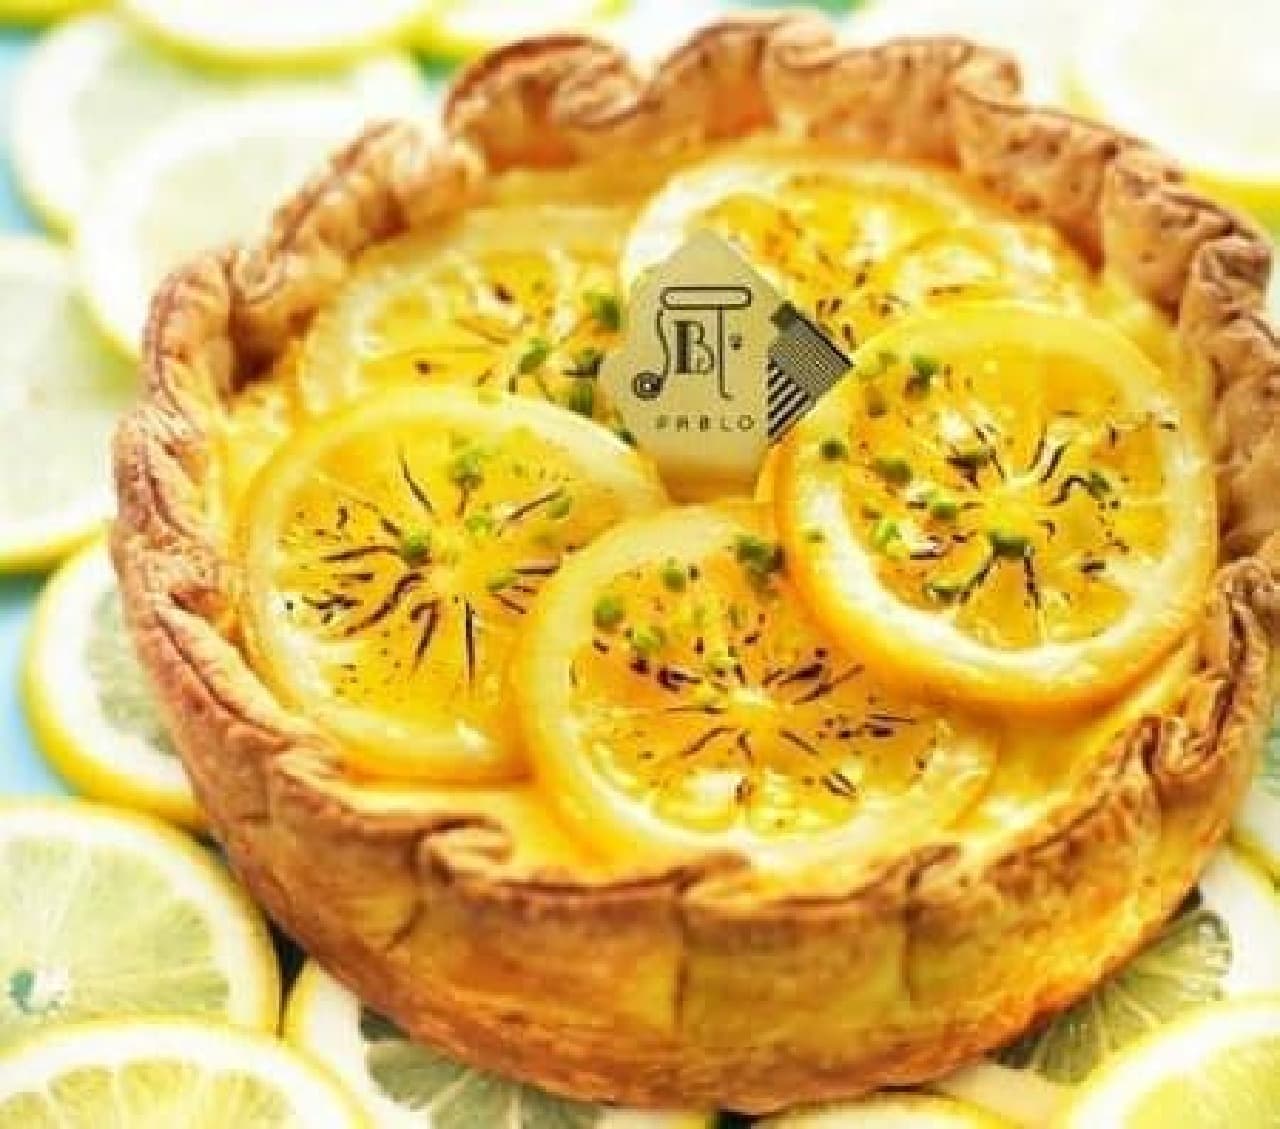 Seasonal tart using seasonal fruits The new product in August is a "lemon" cheese tart!